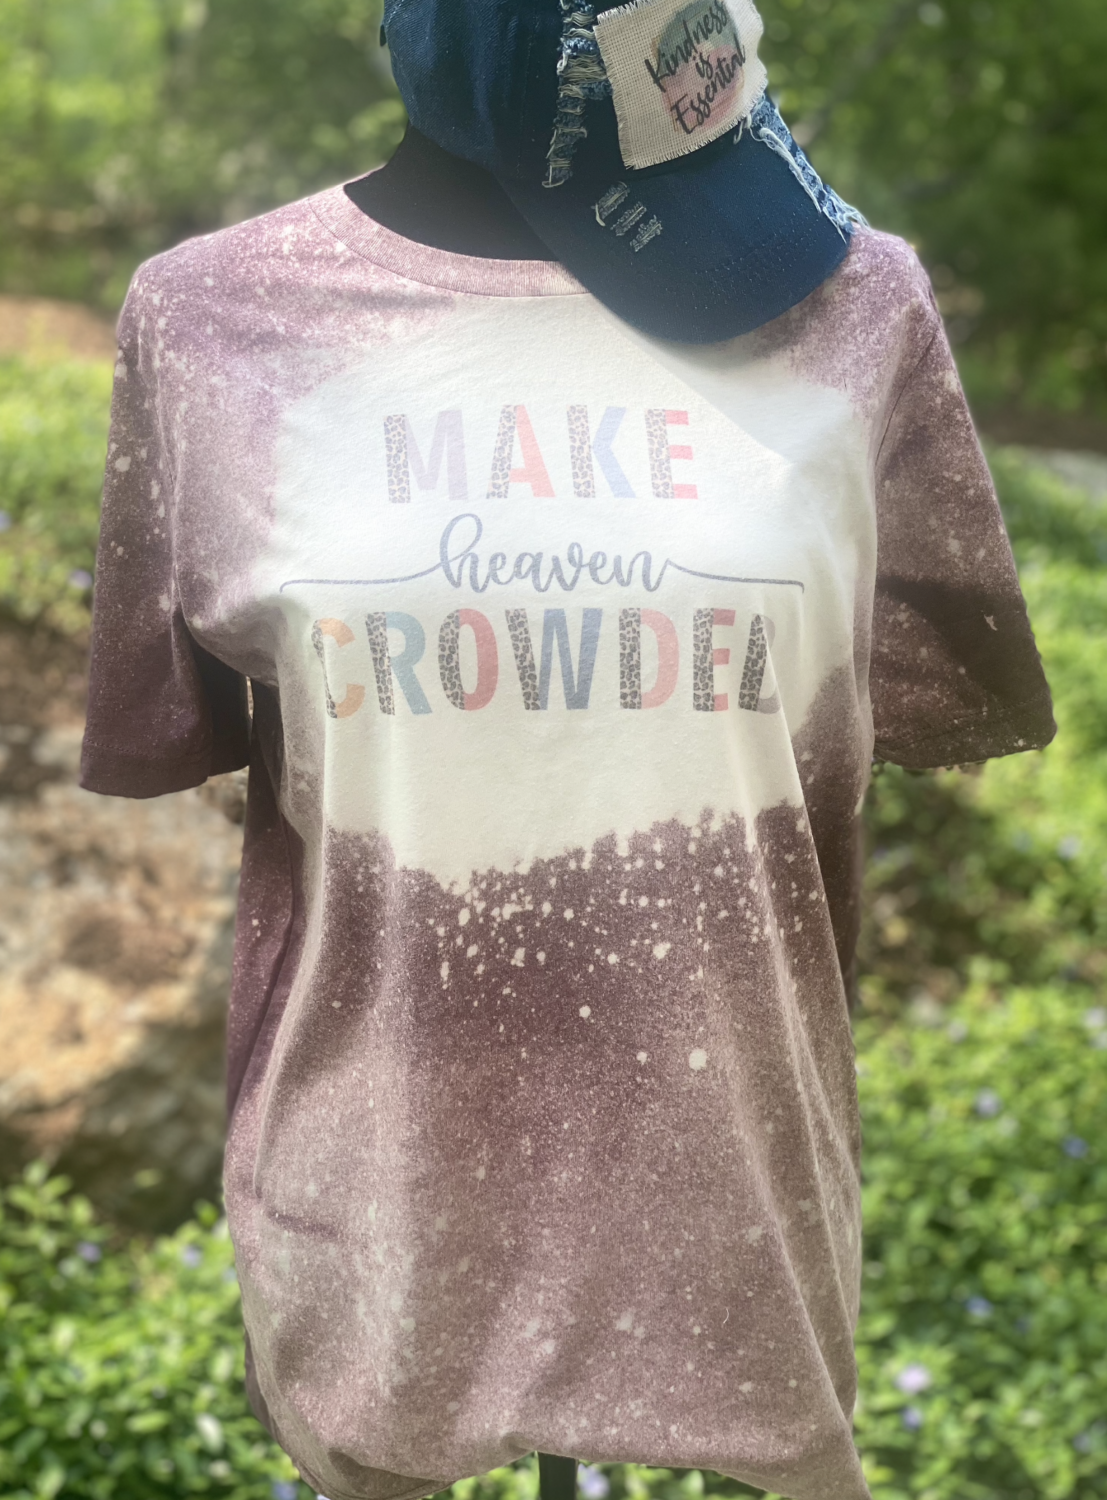 Make heaven crowded bleached T-shirt